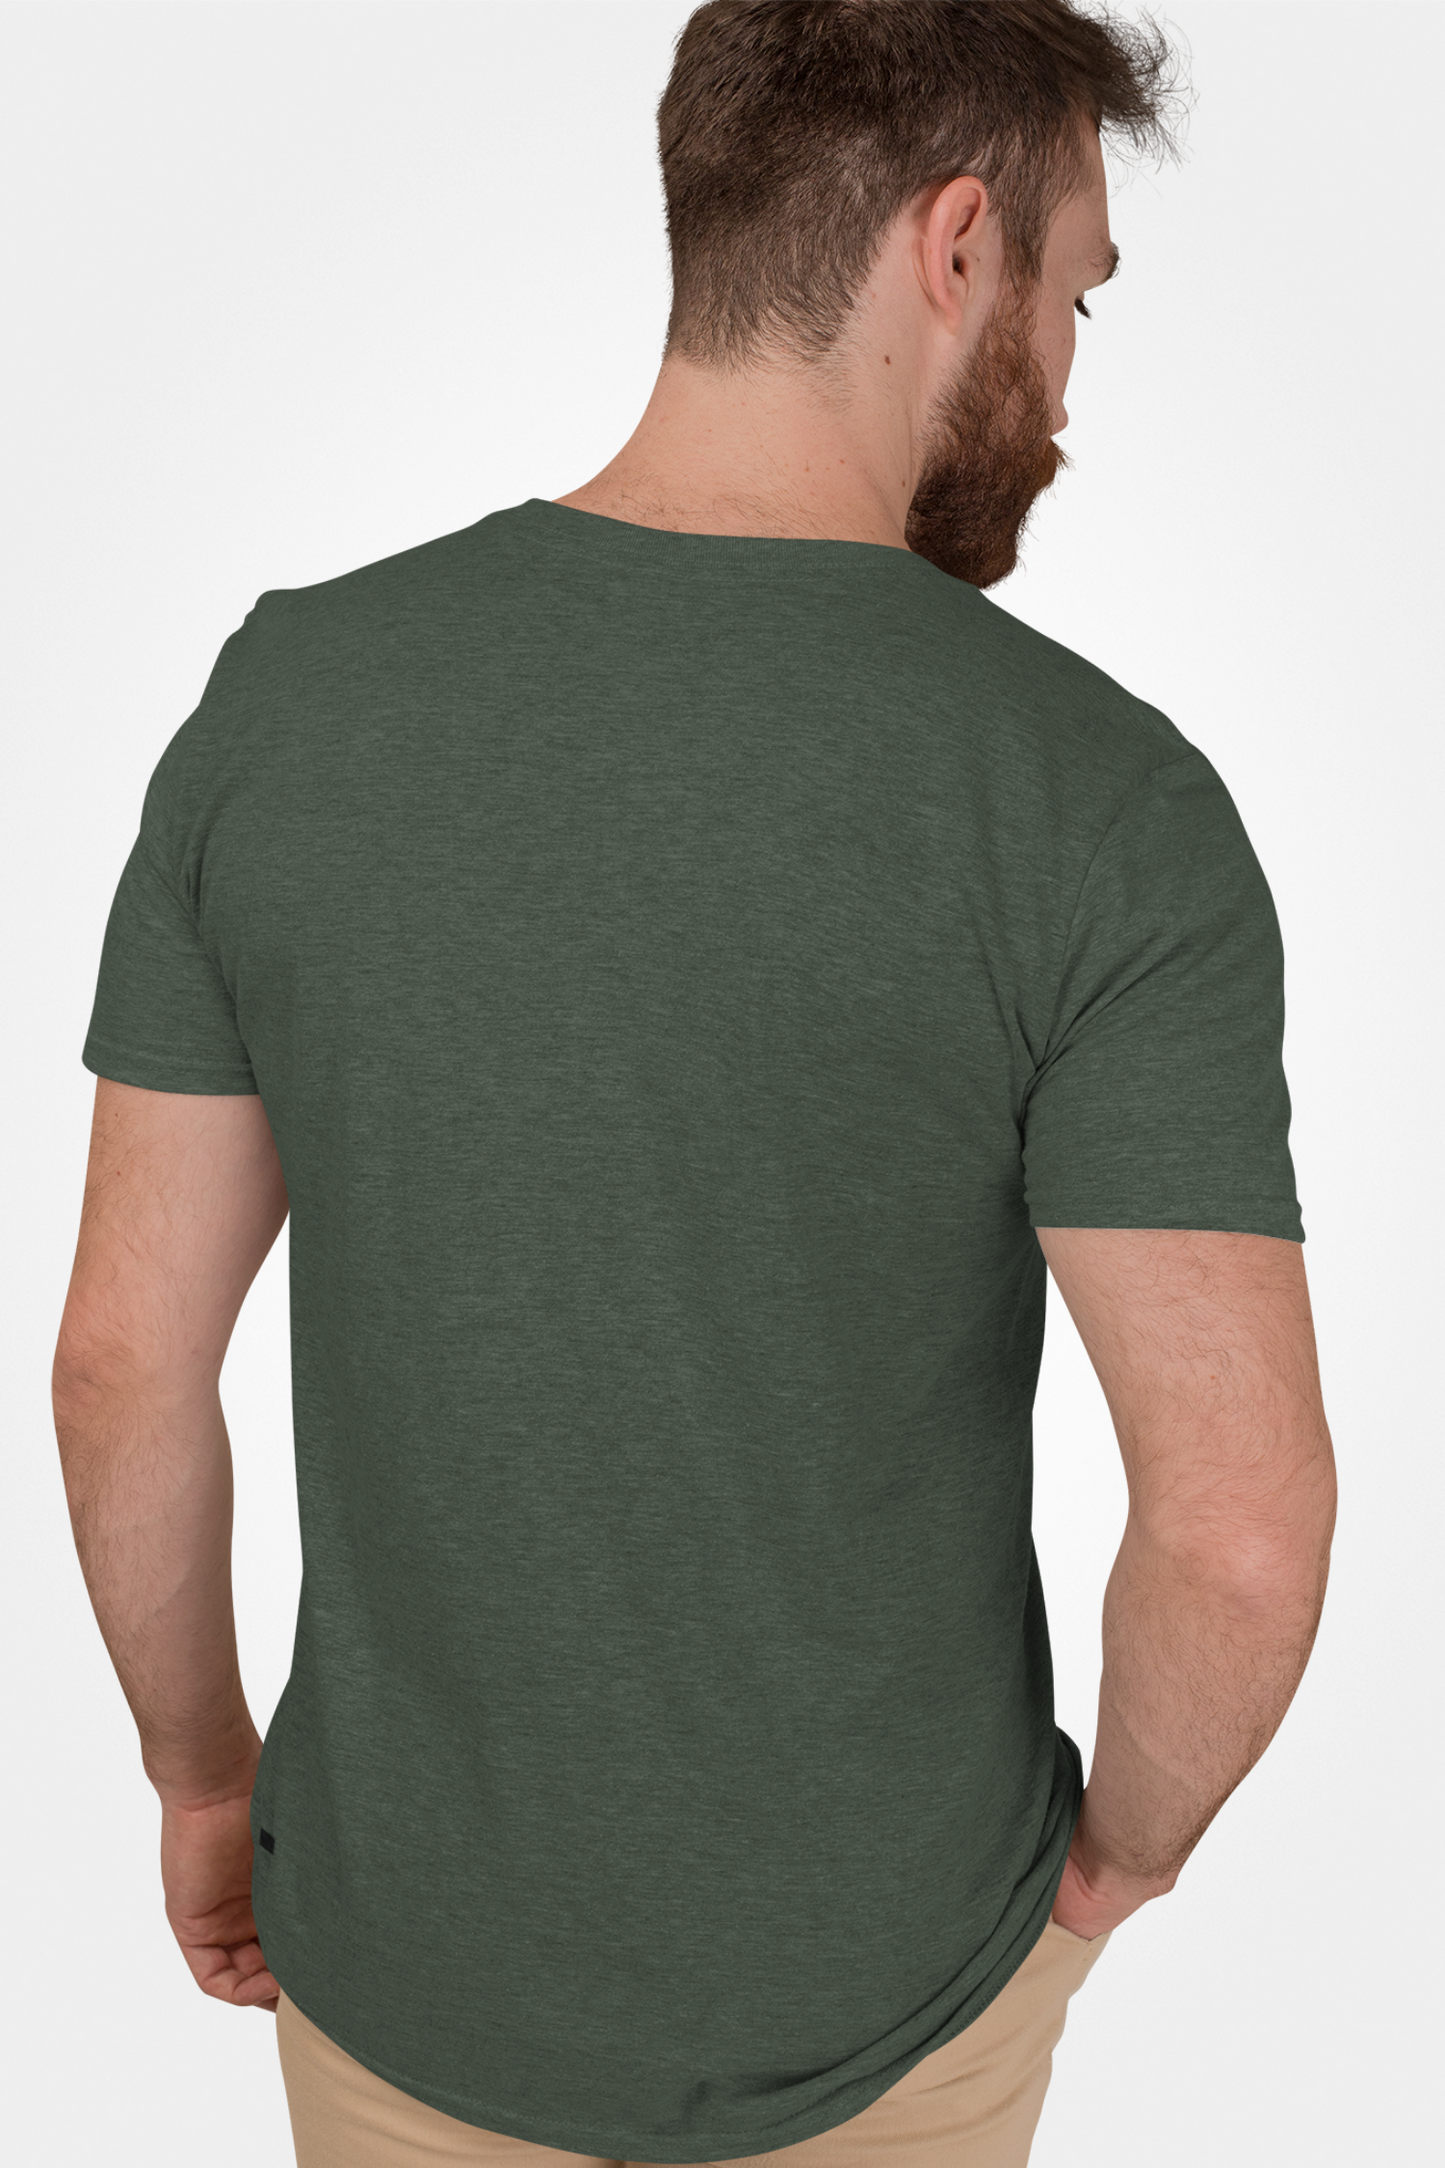 Olive Green Men's T-shirt